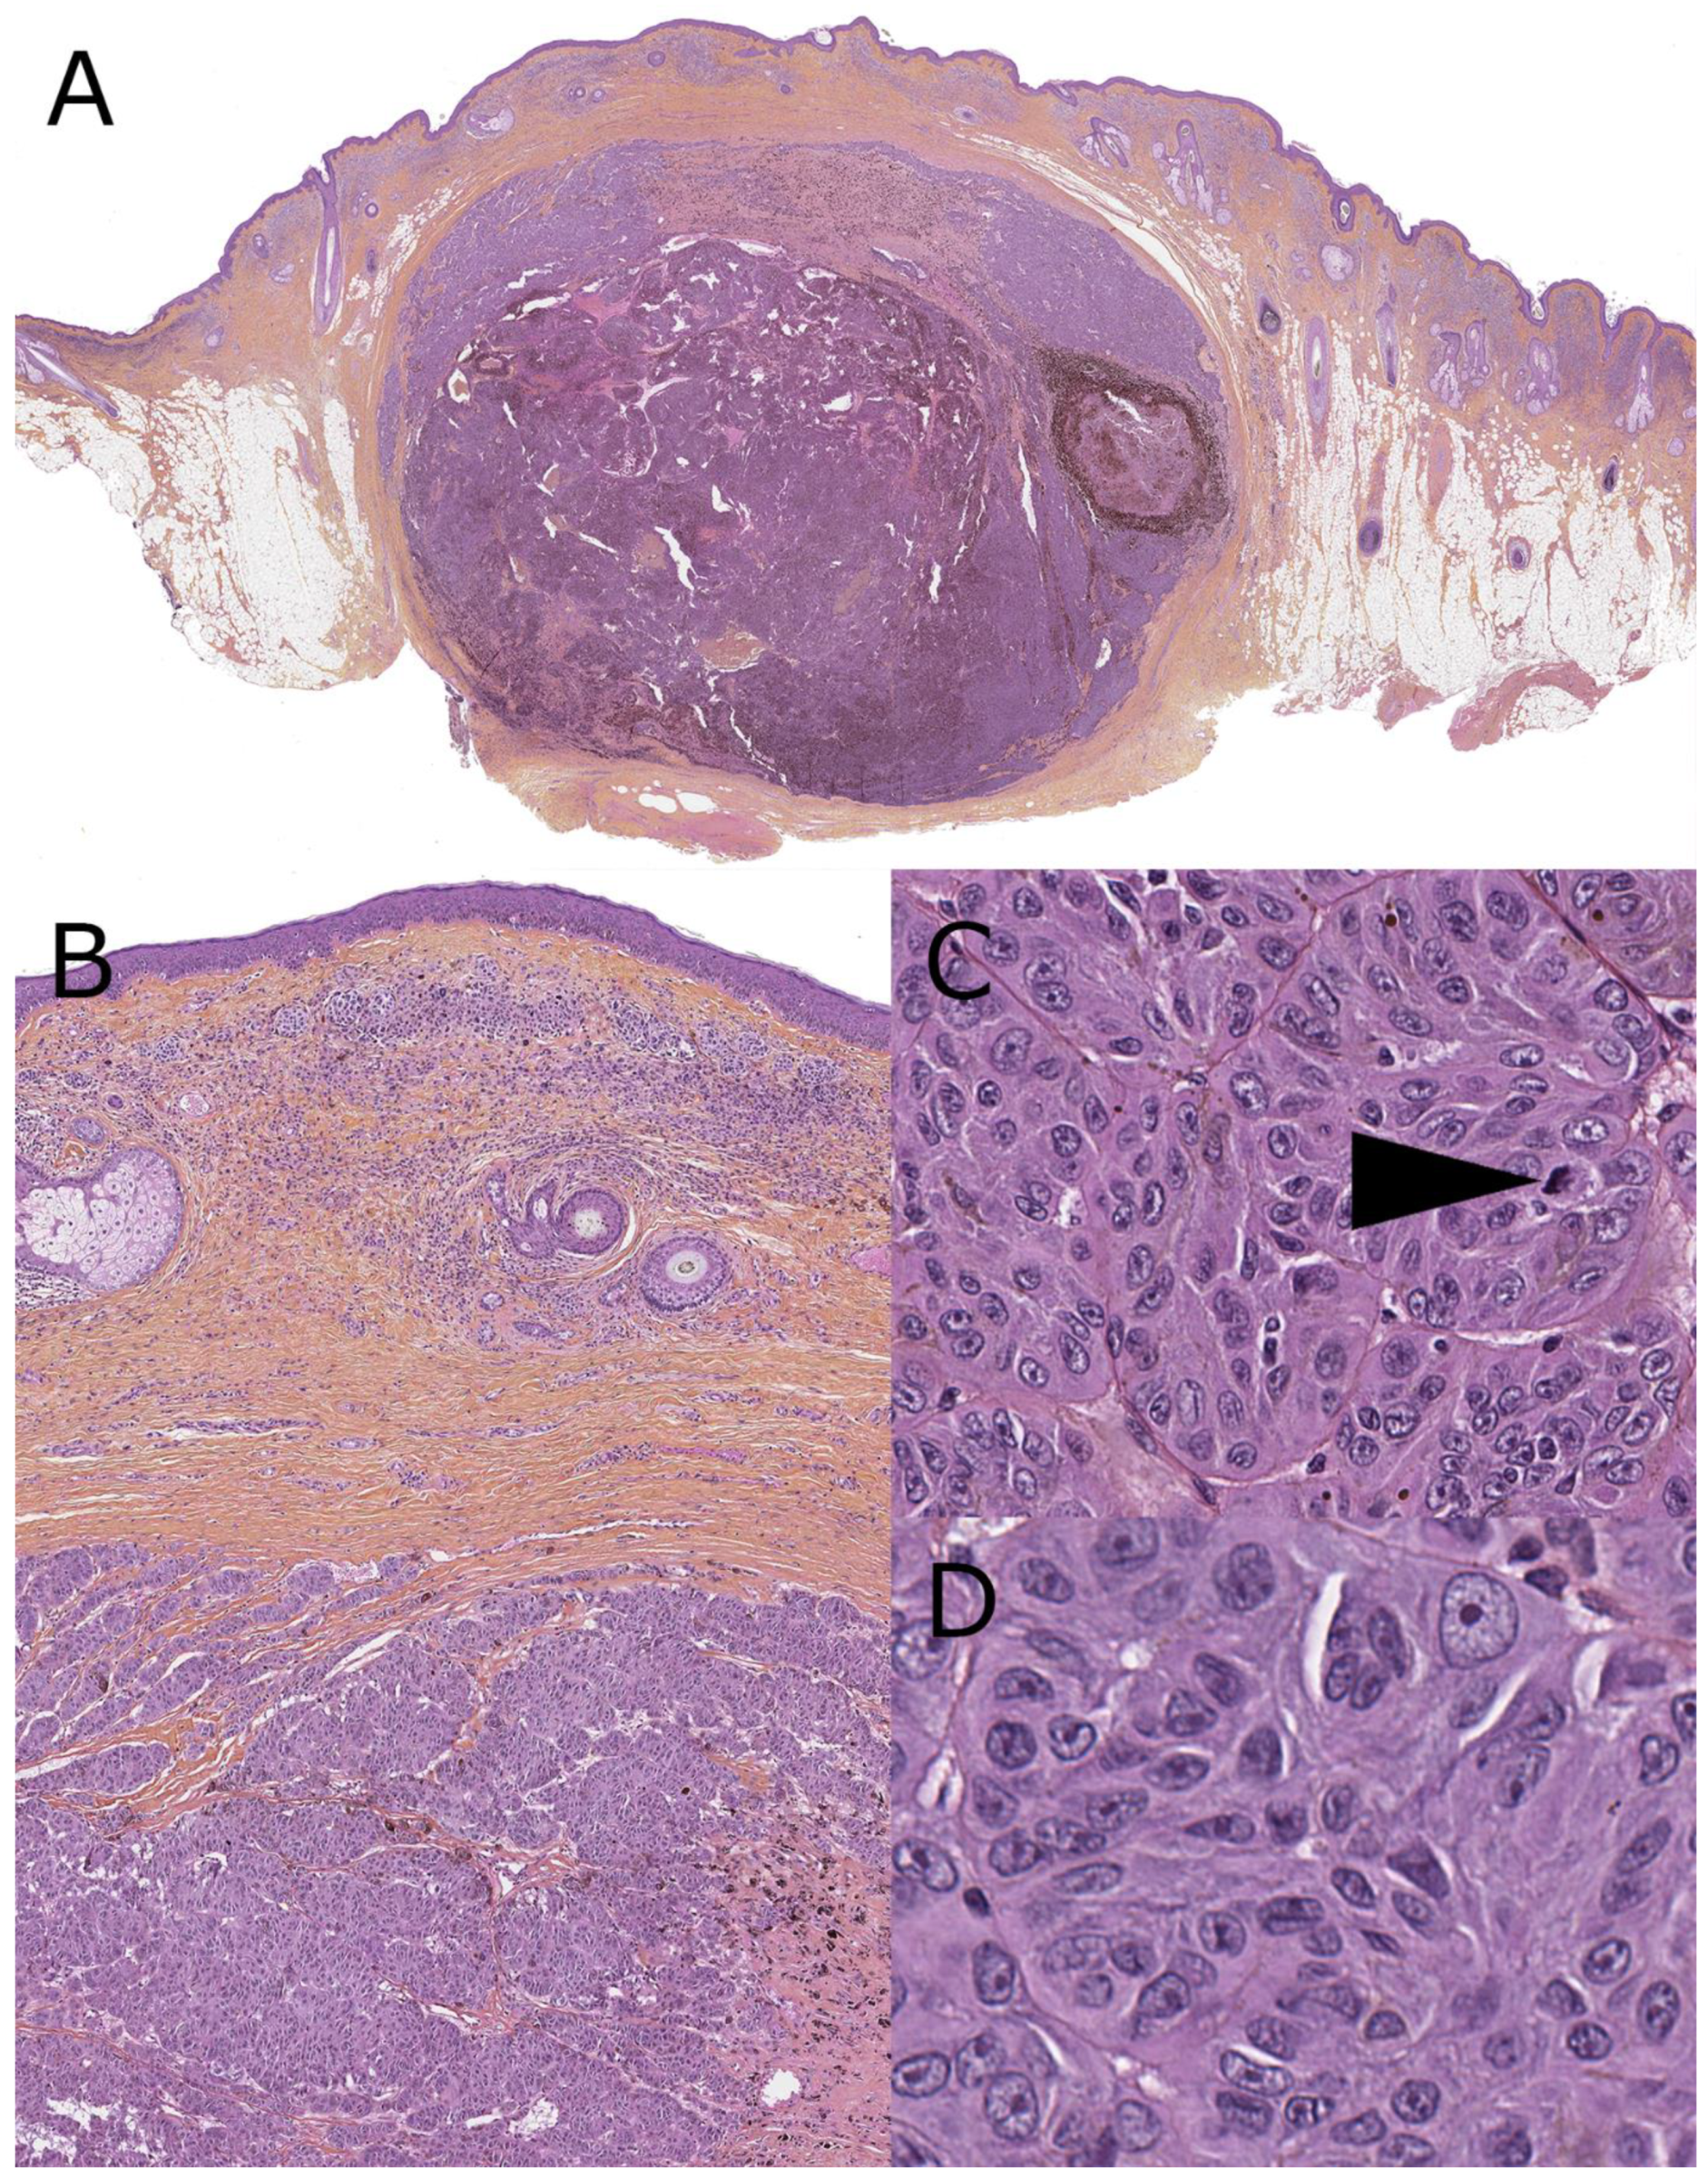 congenital melanocytic nevus histology